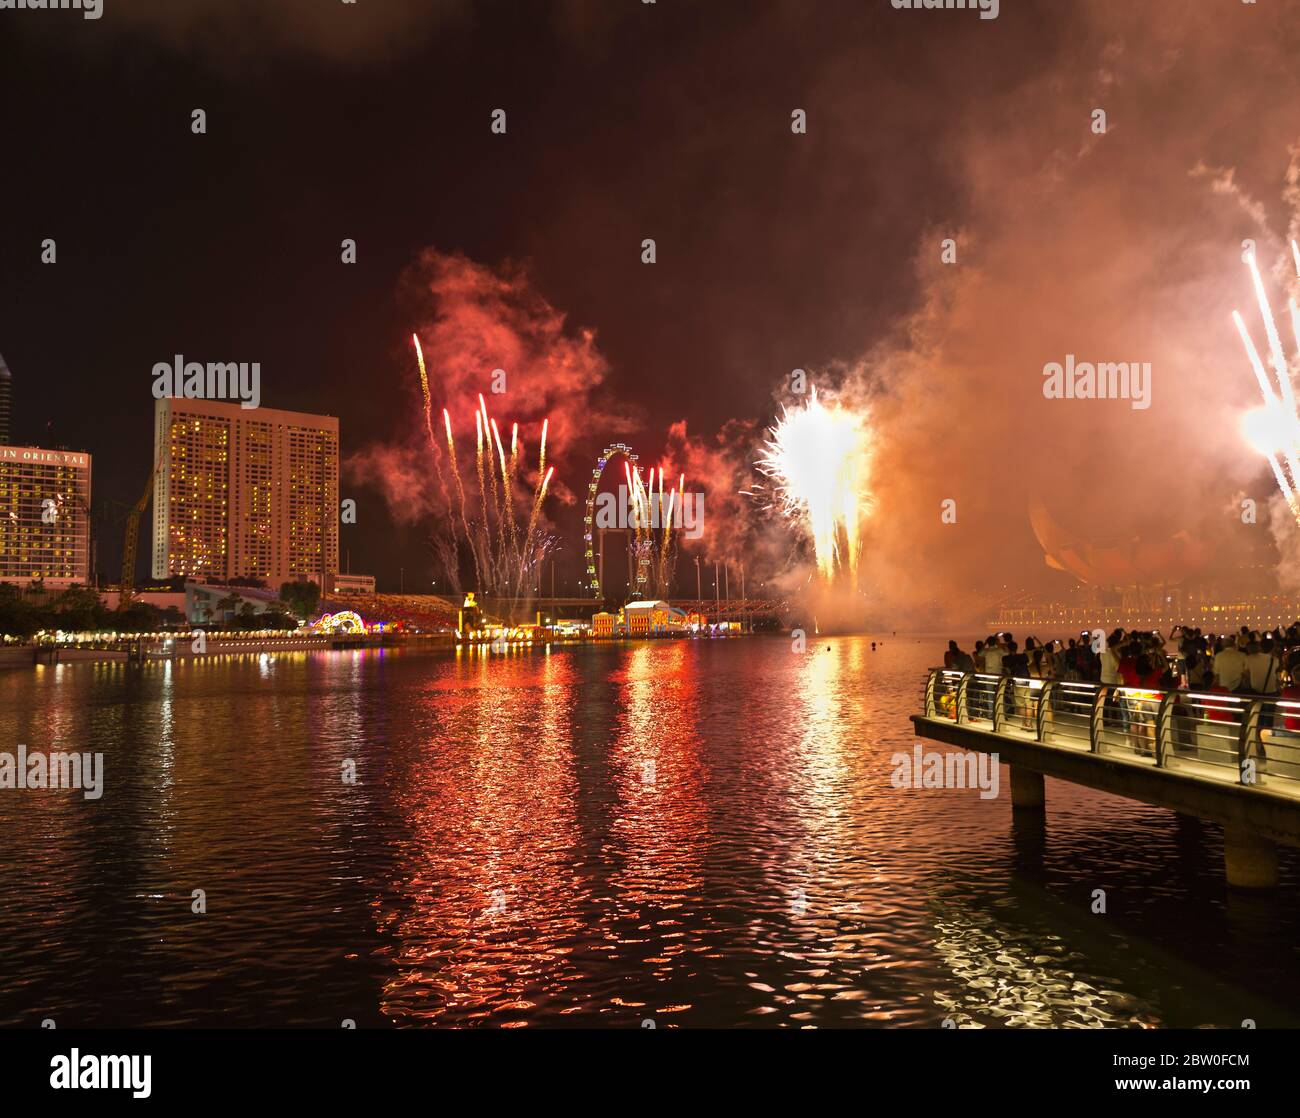 dh Chinese New Year Fireworks MARINA BAY SINGAPORE People watching firework display Stock Photo